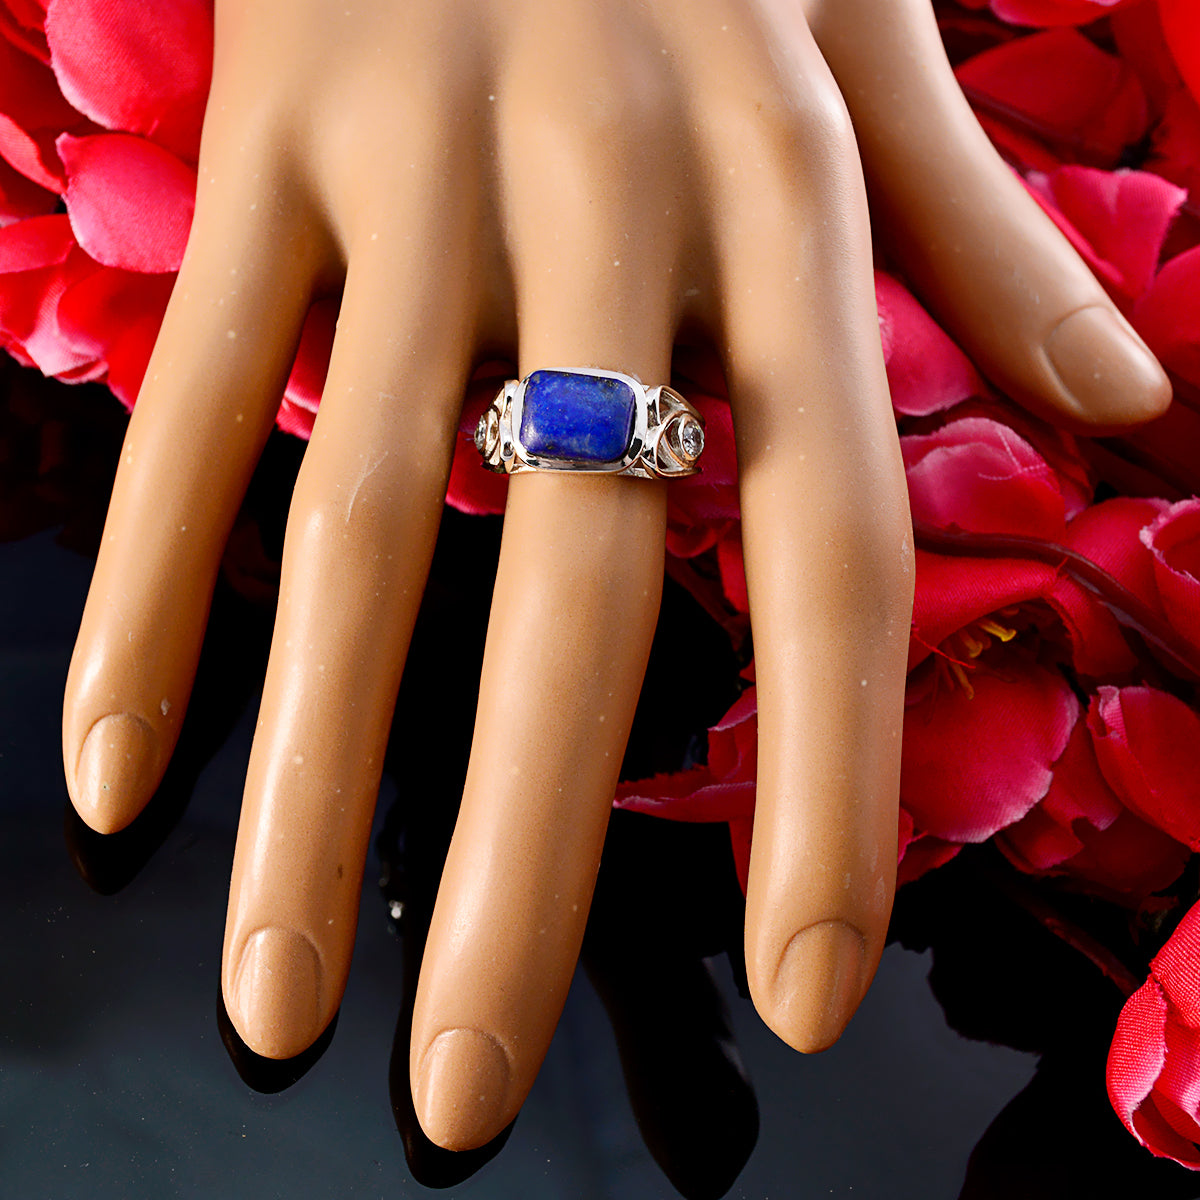 Riyo Inviting Gems Lapis Lazuli 925 Silver Ring Statement Jewellery